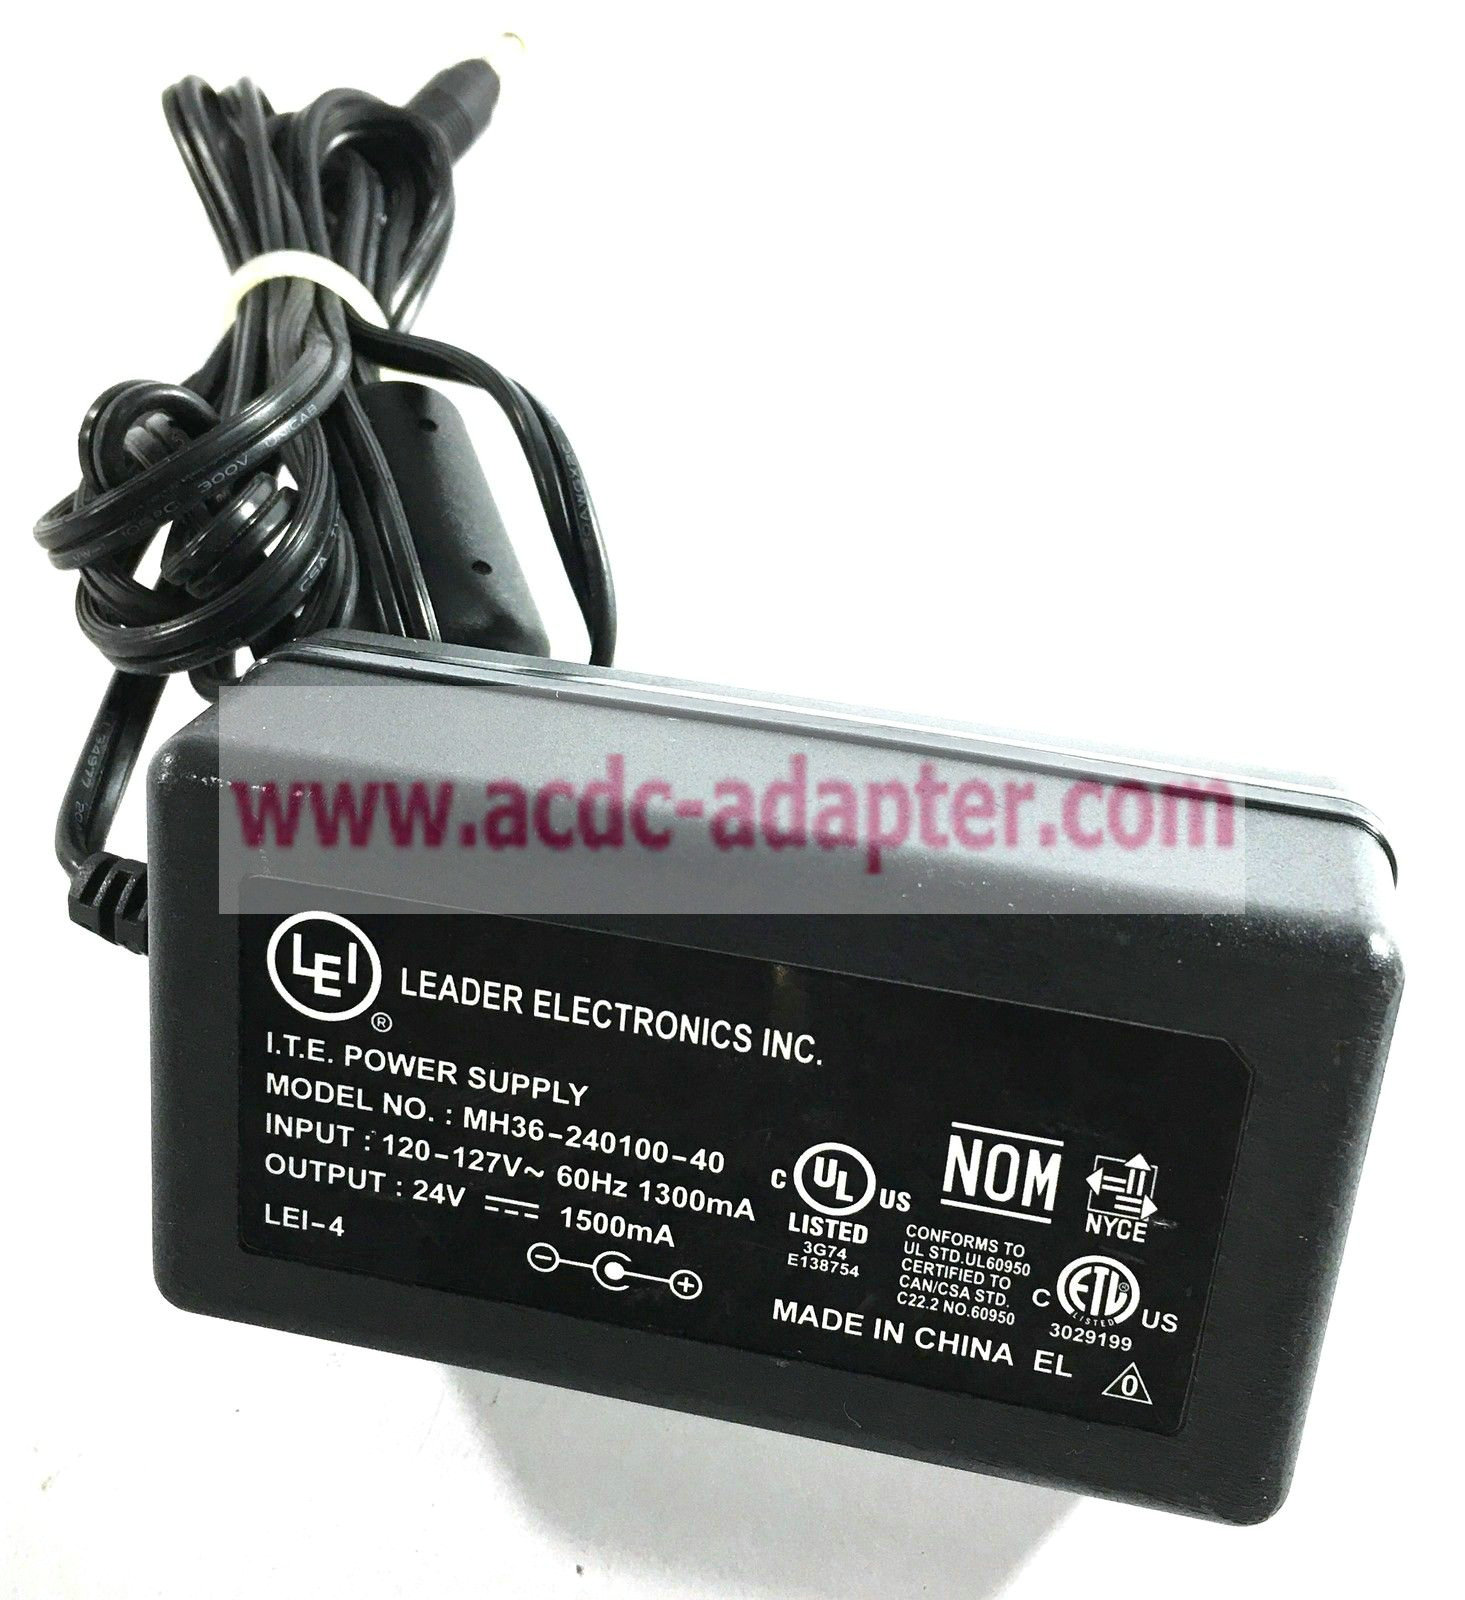 Genuine 24V 1500mA Leader Electronics ITE Power Supply MH36-240100-40 AC Power Ada